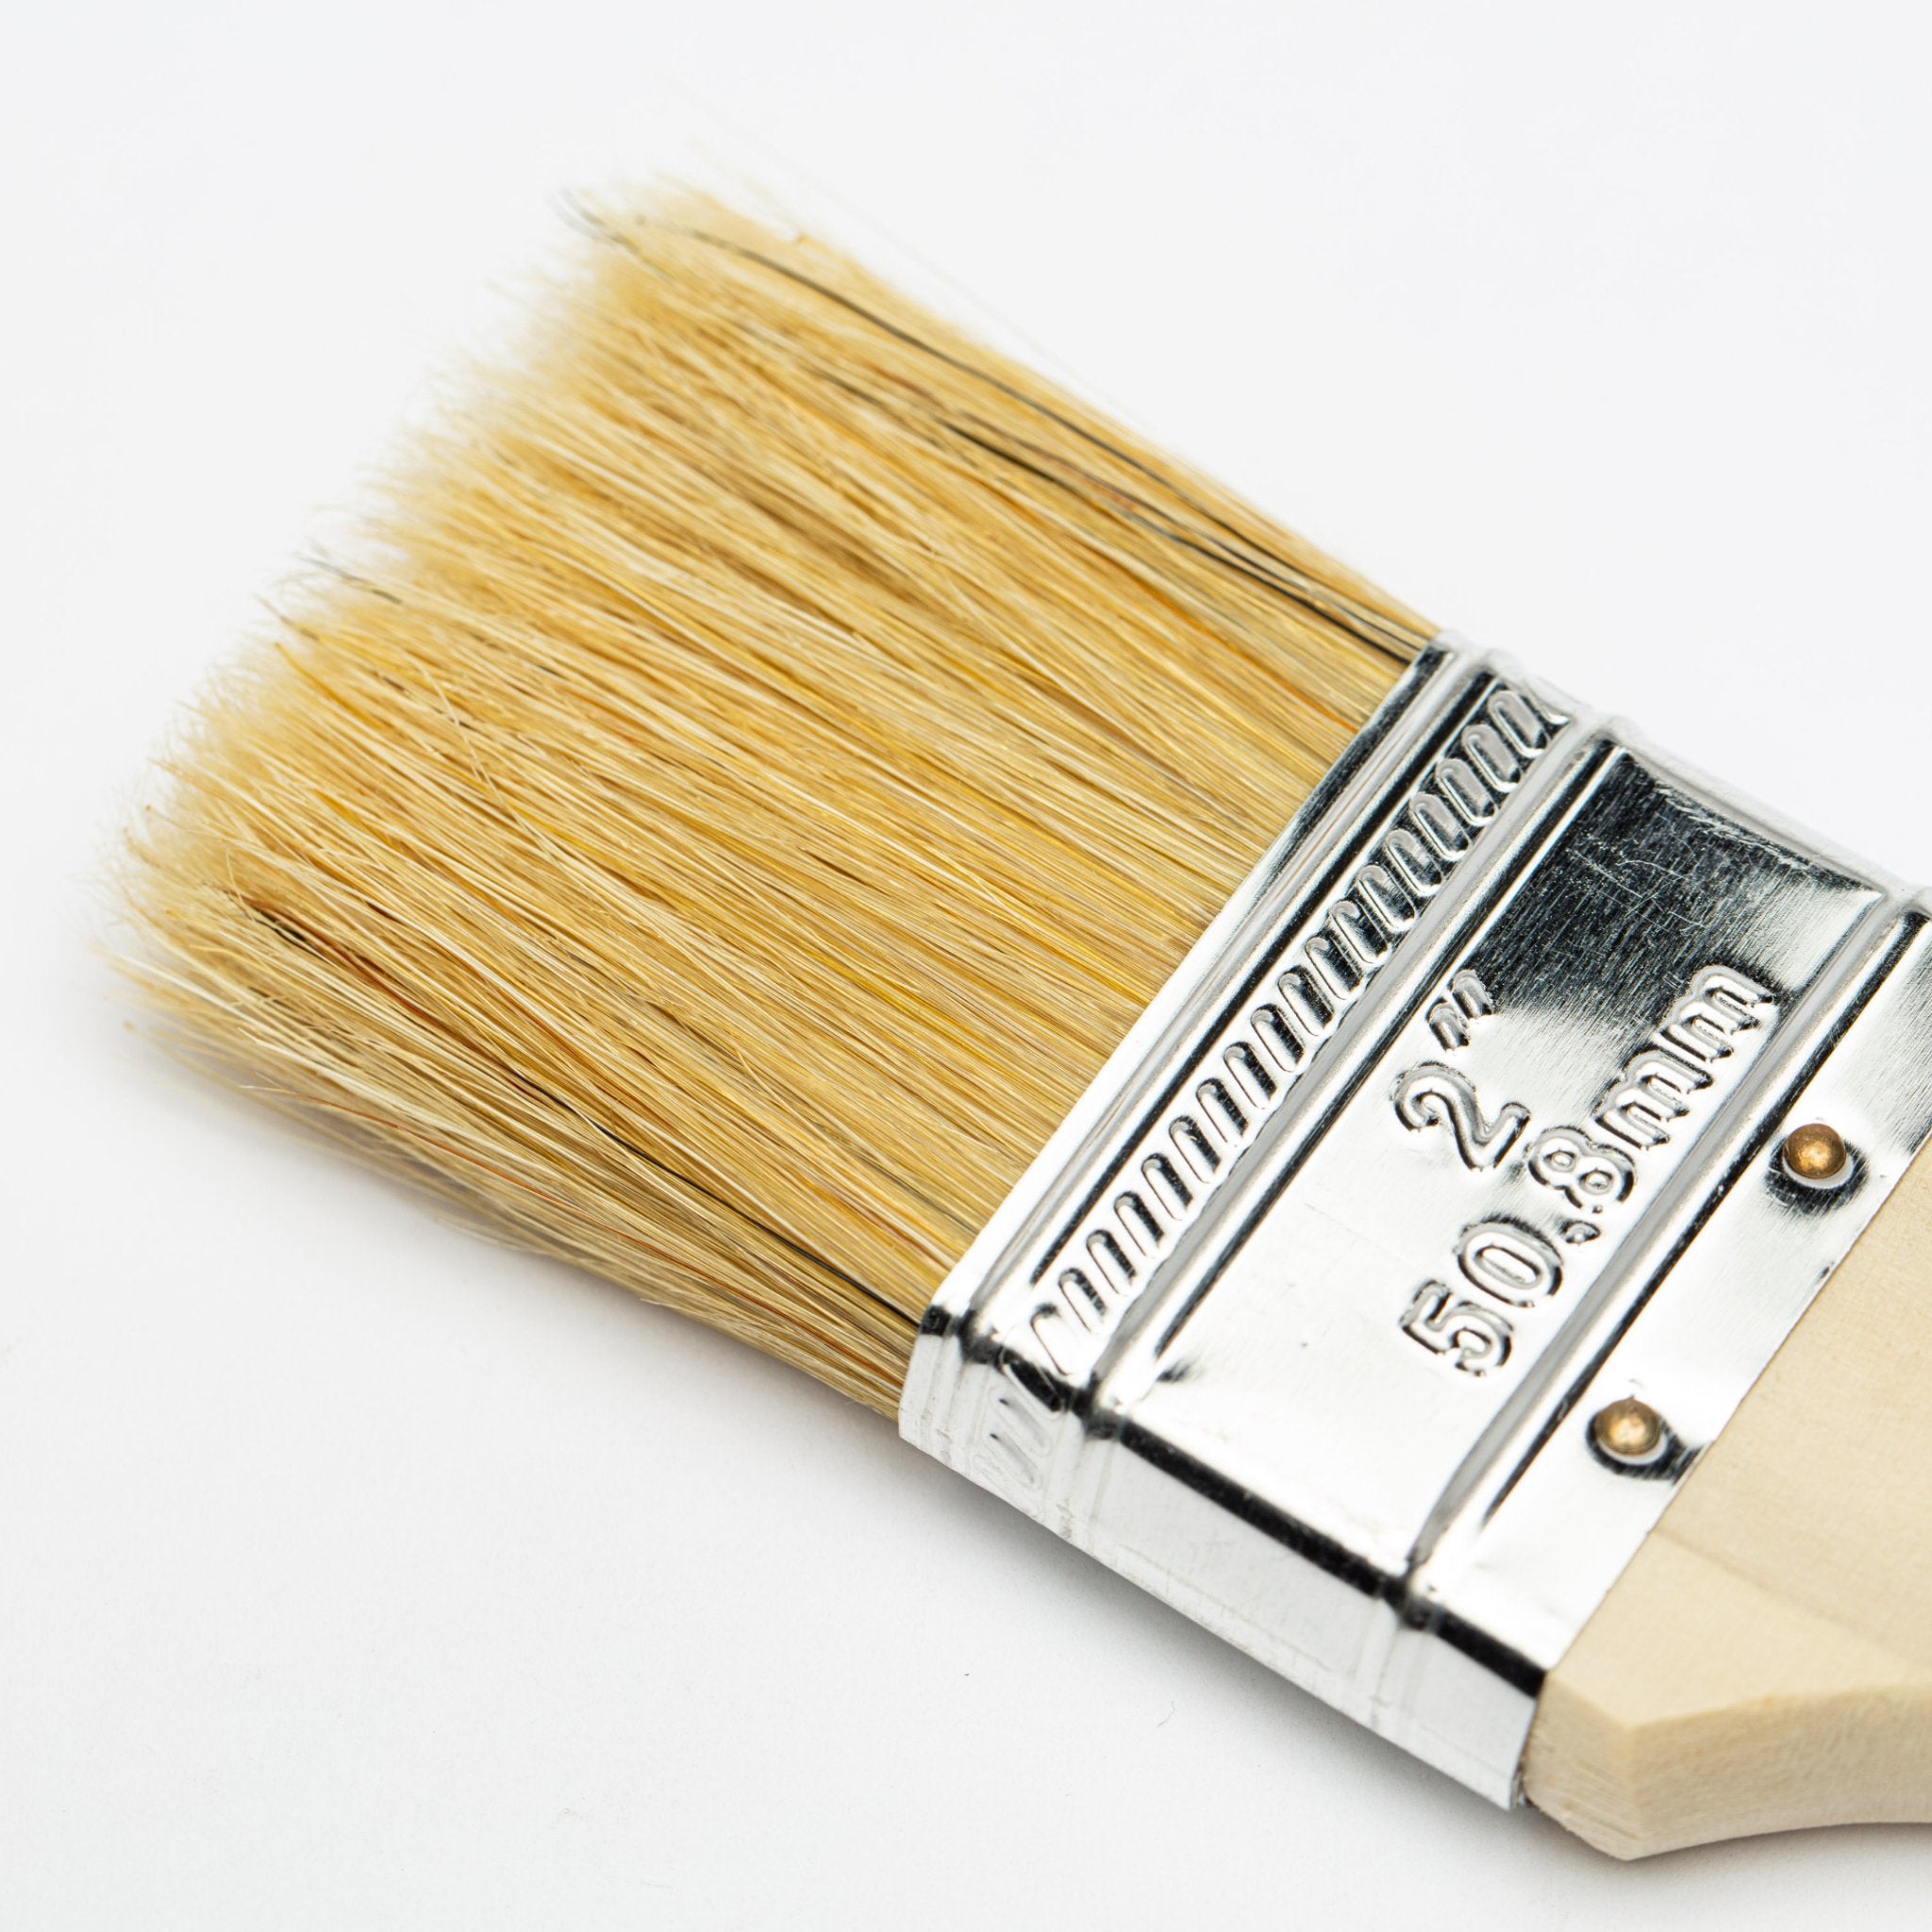 Starbond Natural Bristles Wood Stain Brush, 2 inches | Adhesive | Starbond